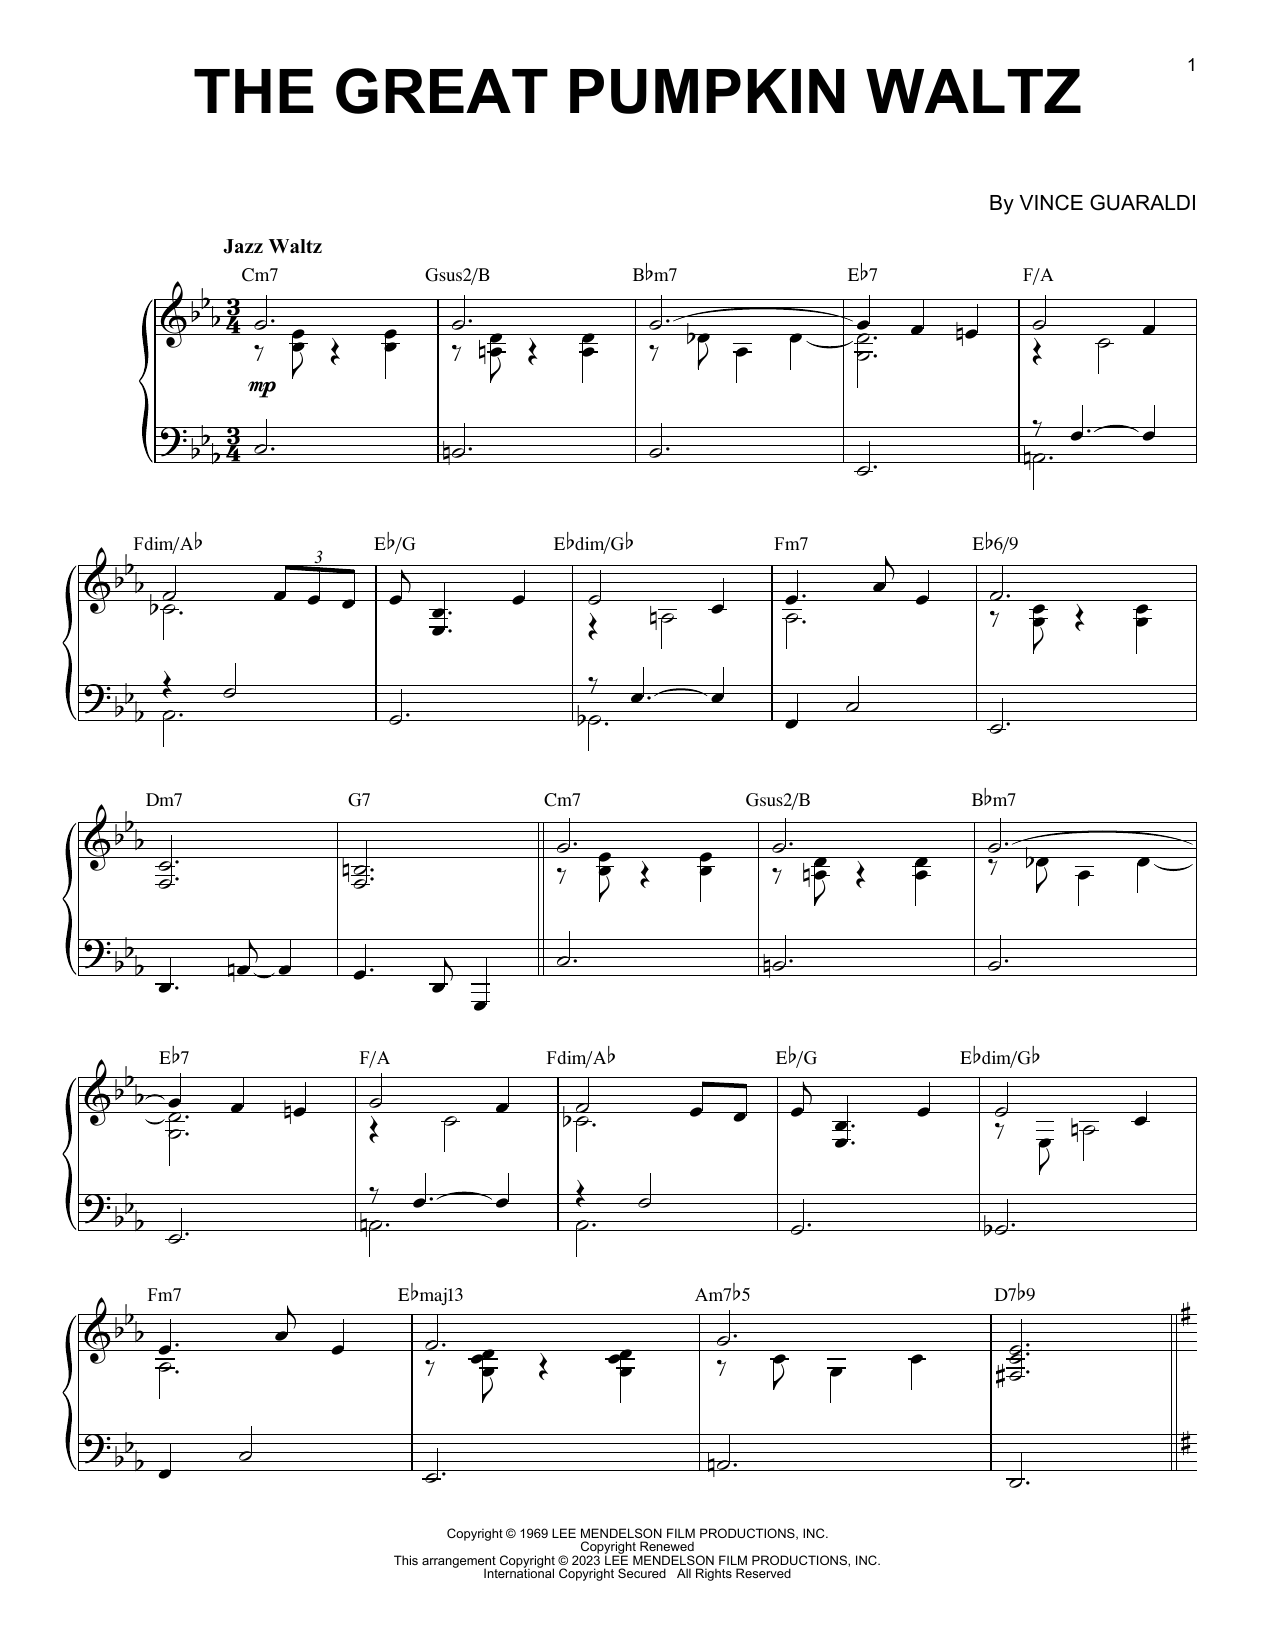 Download Vince Guaraldi The Great Pumpkin Waltz [Jazz version] Sheet Music